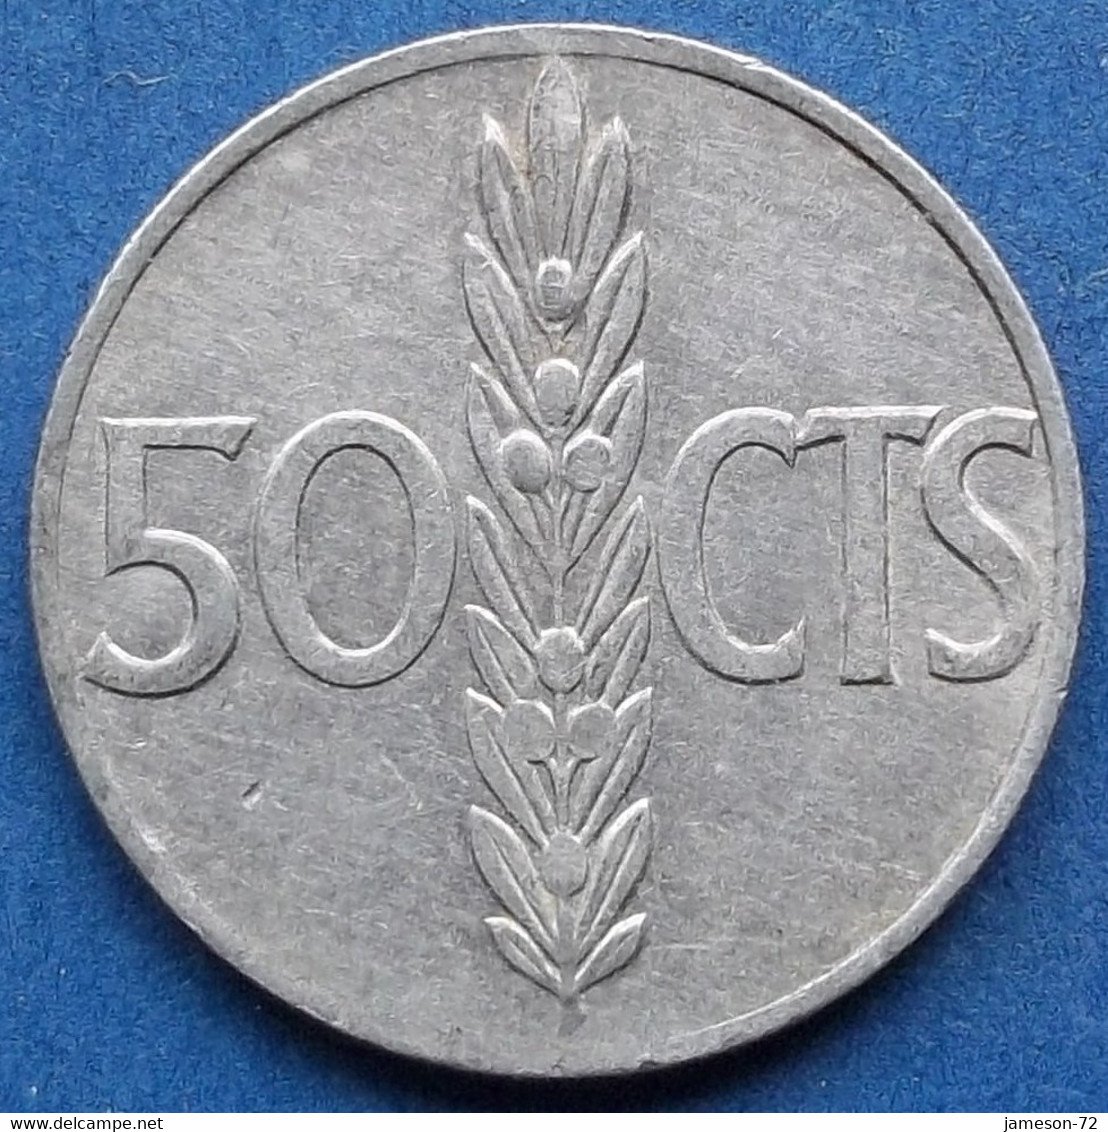 SPAIN - 50 Centimos 1966 *71 KM# 795 Francisco Franco (1936-1975) - Edelweiss Coins - 50 Centimos